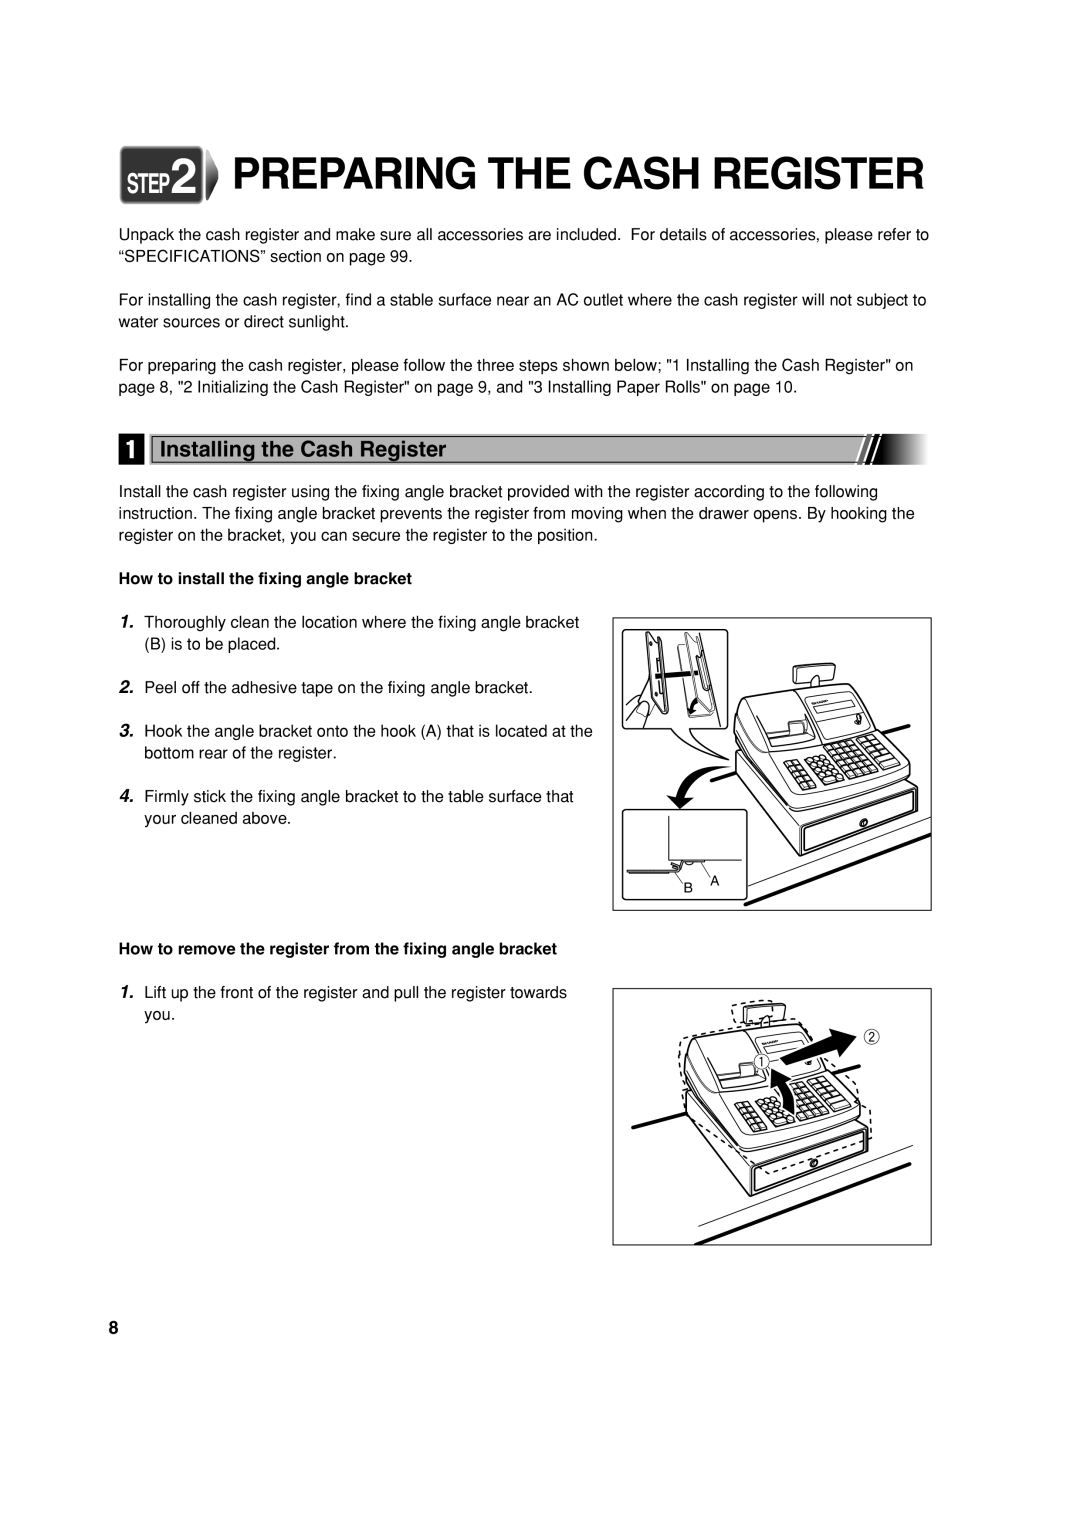 Sharp XE-A303 Preparing The Cash Register, Installing the Cash Register, How to install the fixing angle bracket 